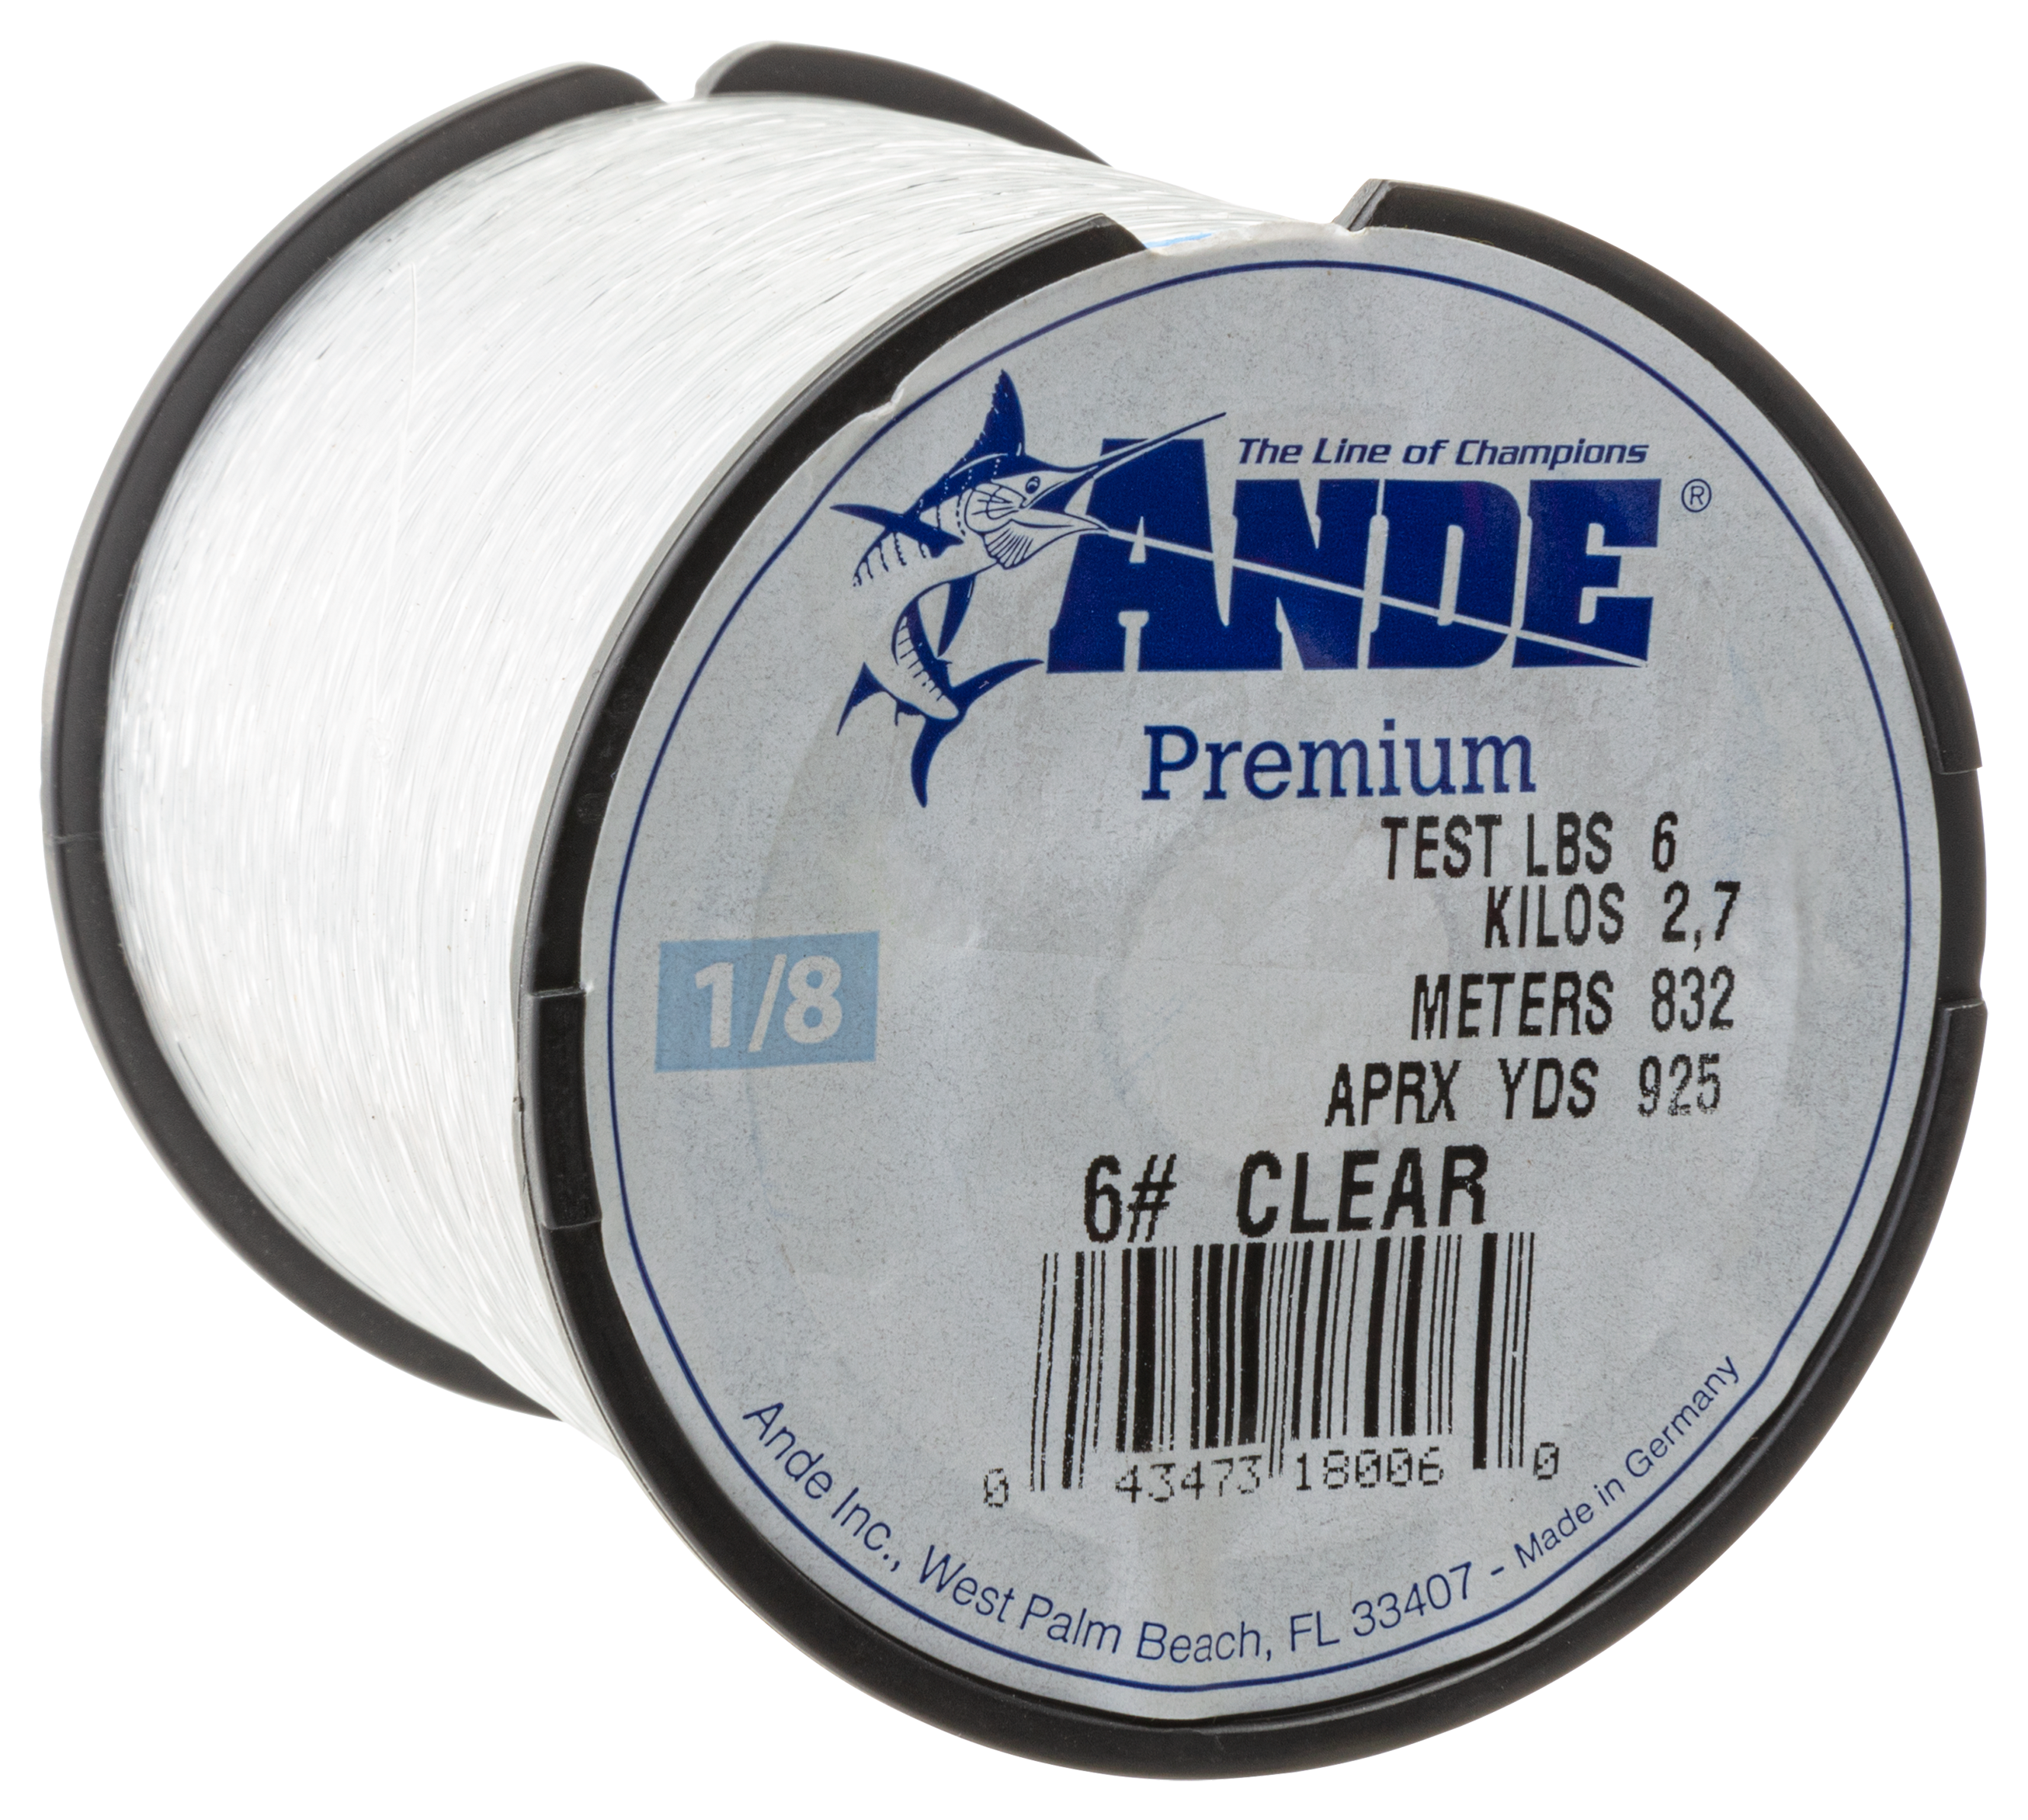 Ande Premium Monofilament Line 1/8 lb. Spool